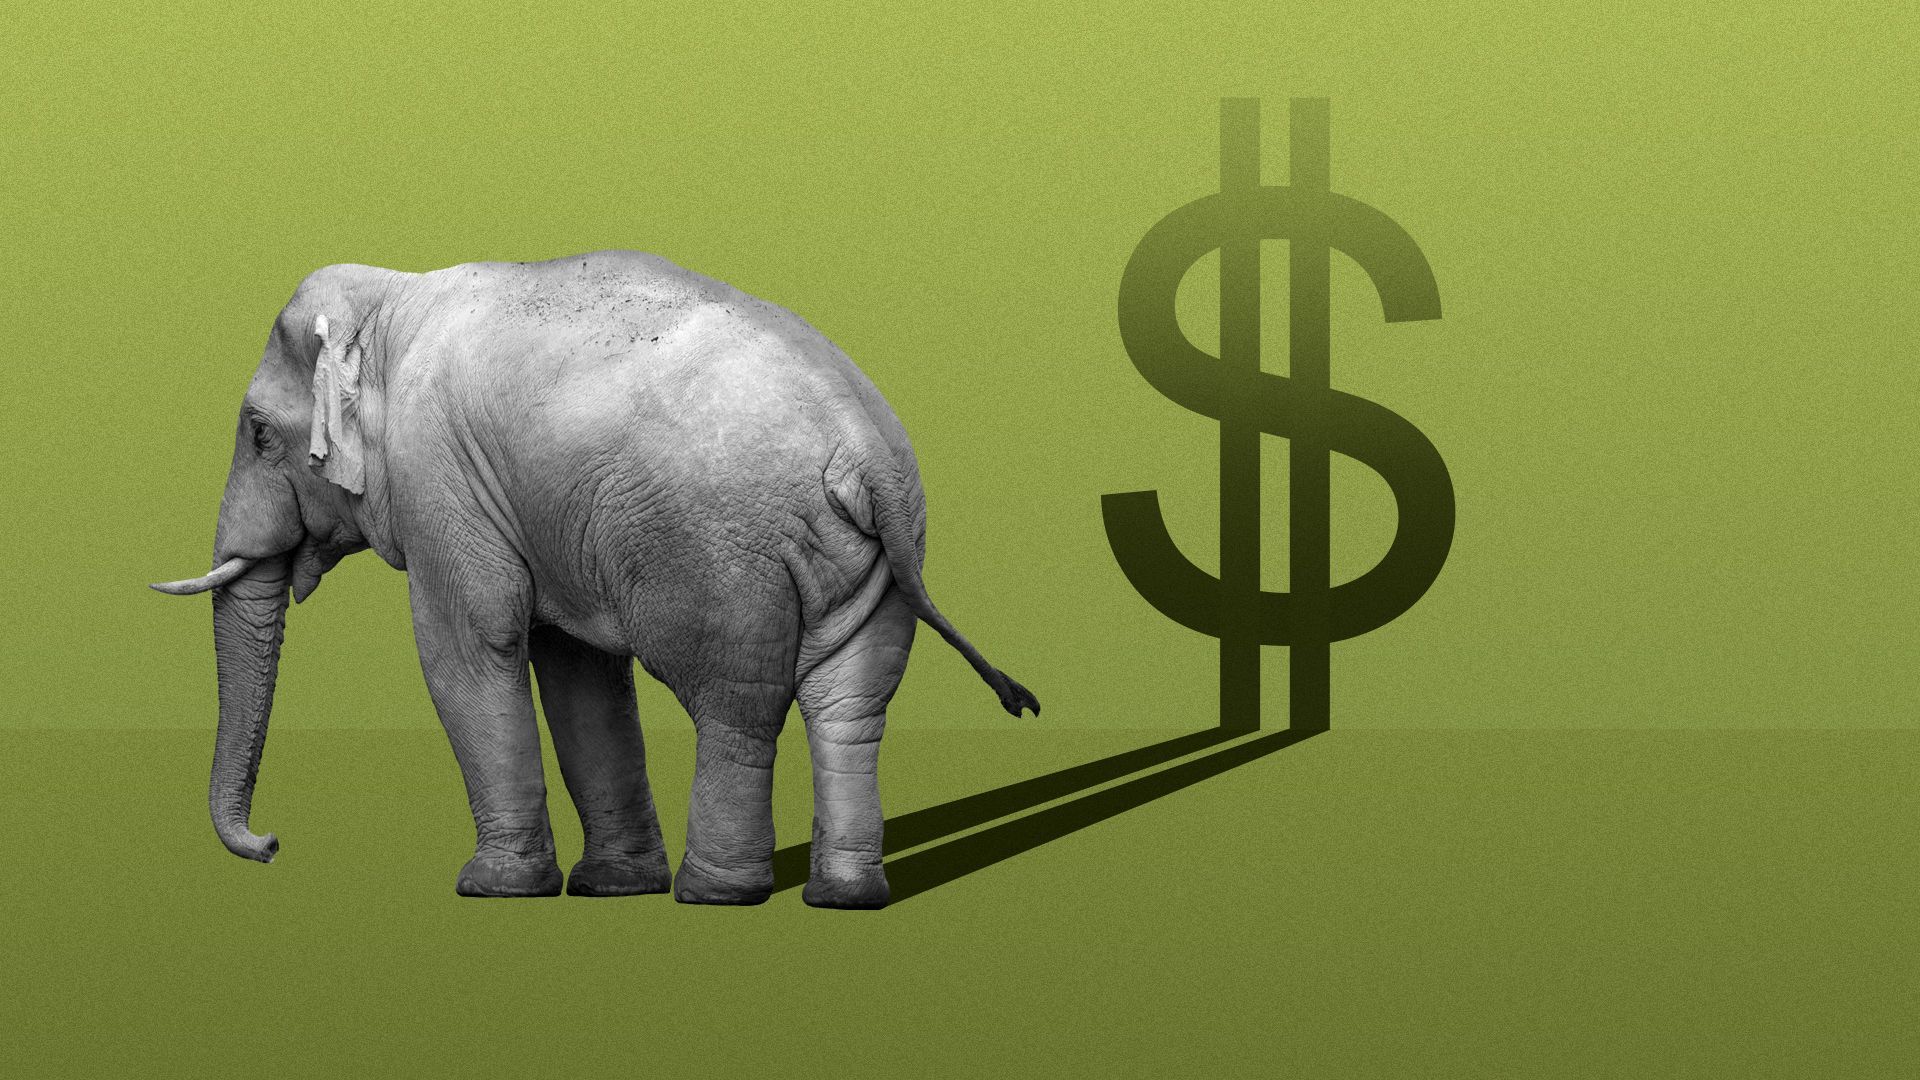 Illustration of an elephant casting a dollar sign shadow